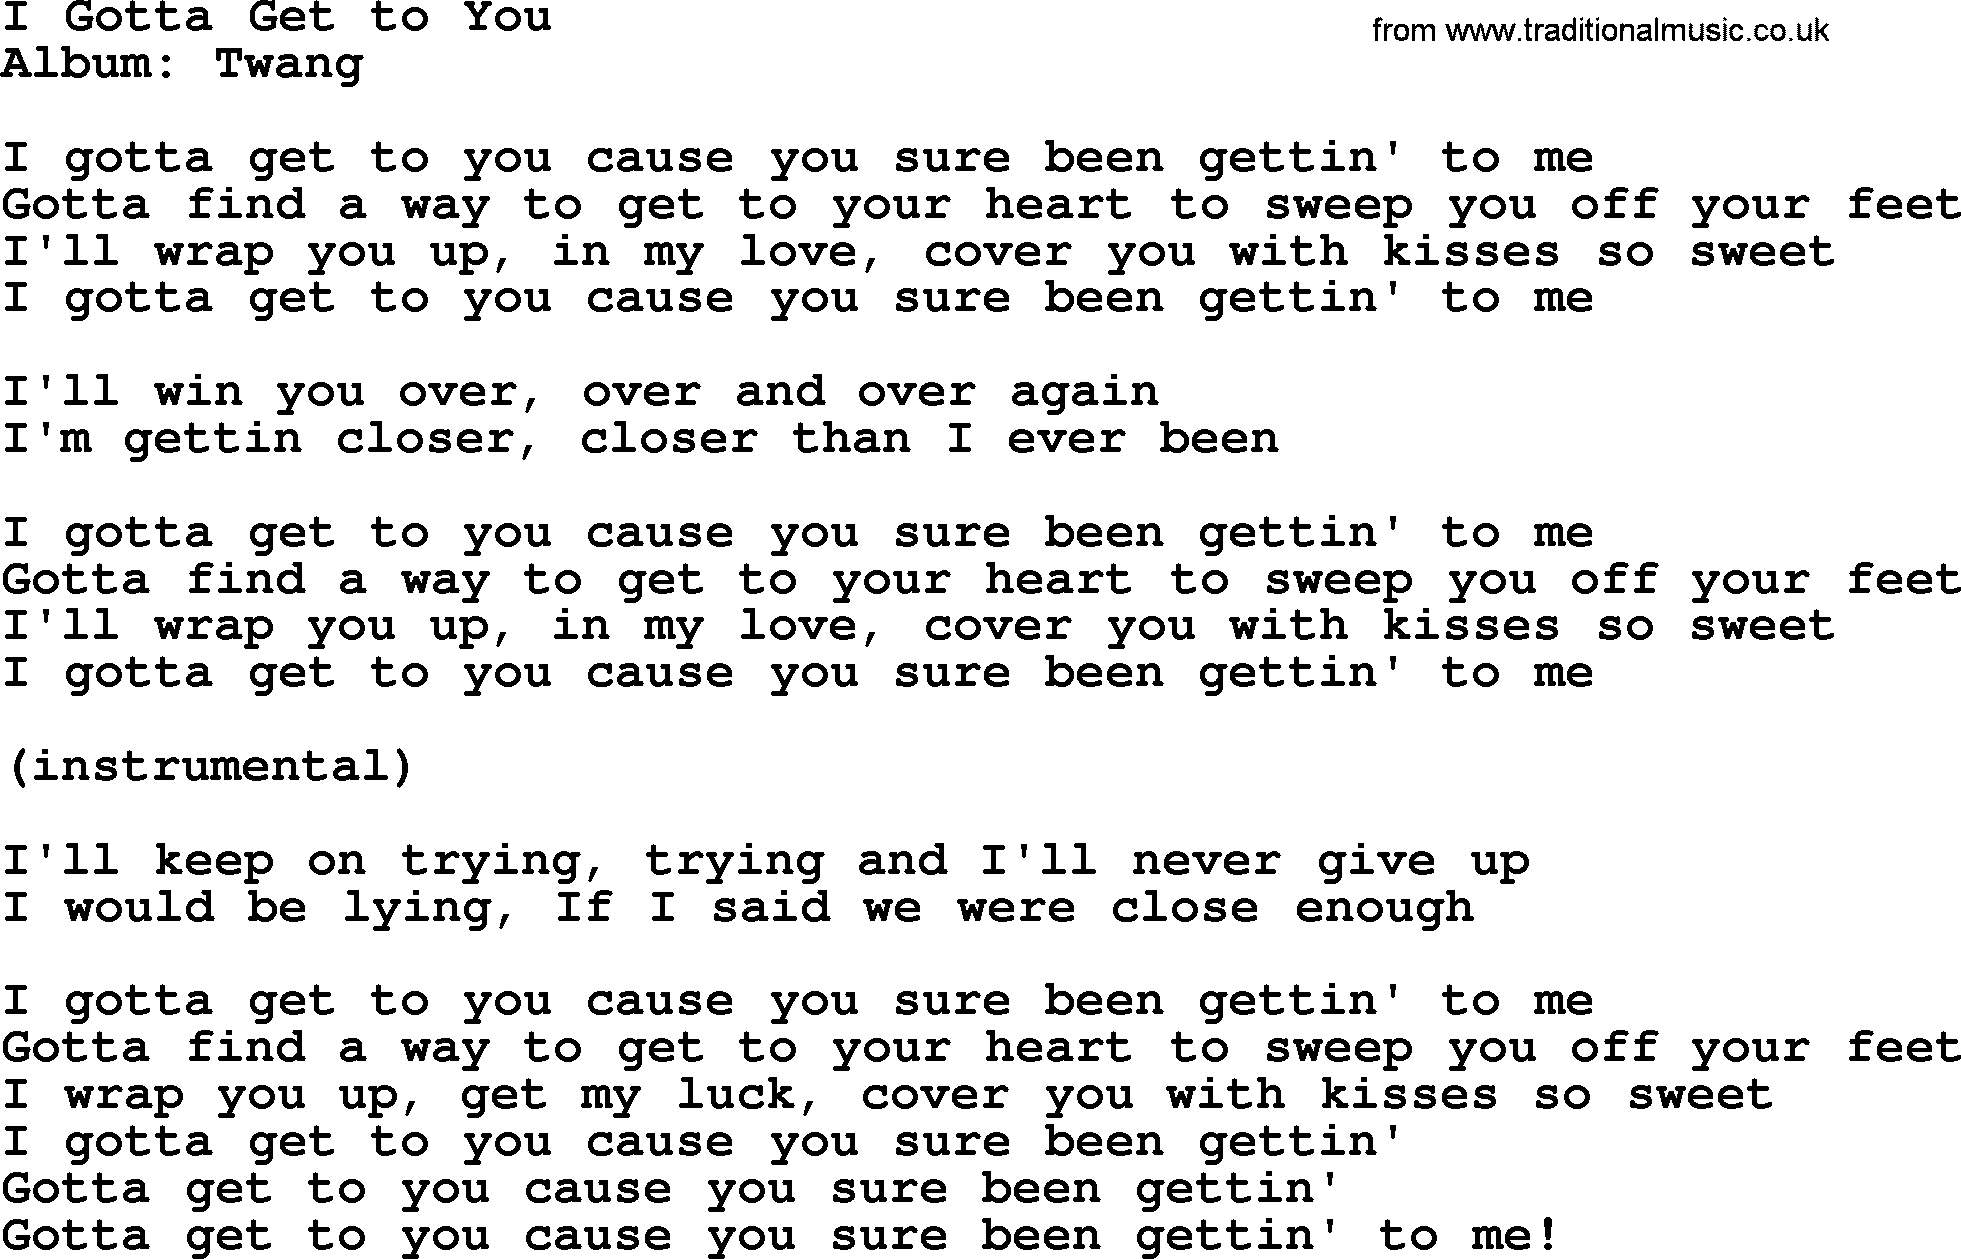 George Strait song: I Gotta Get to You, lyrics